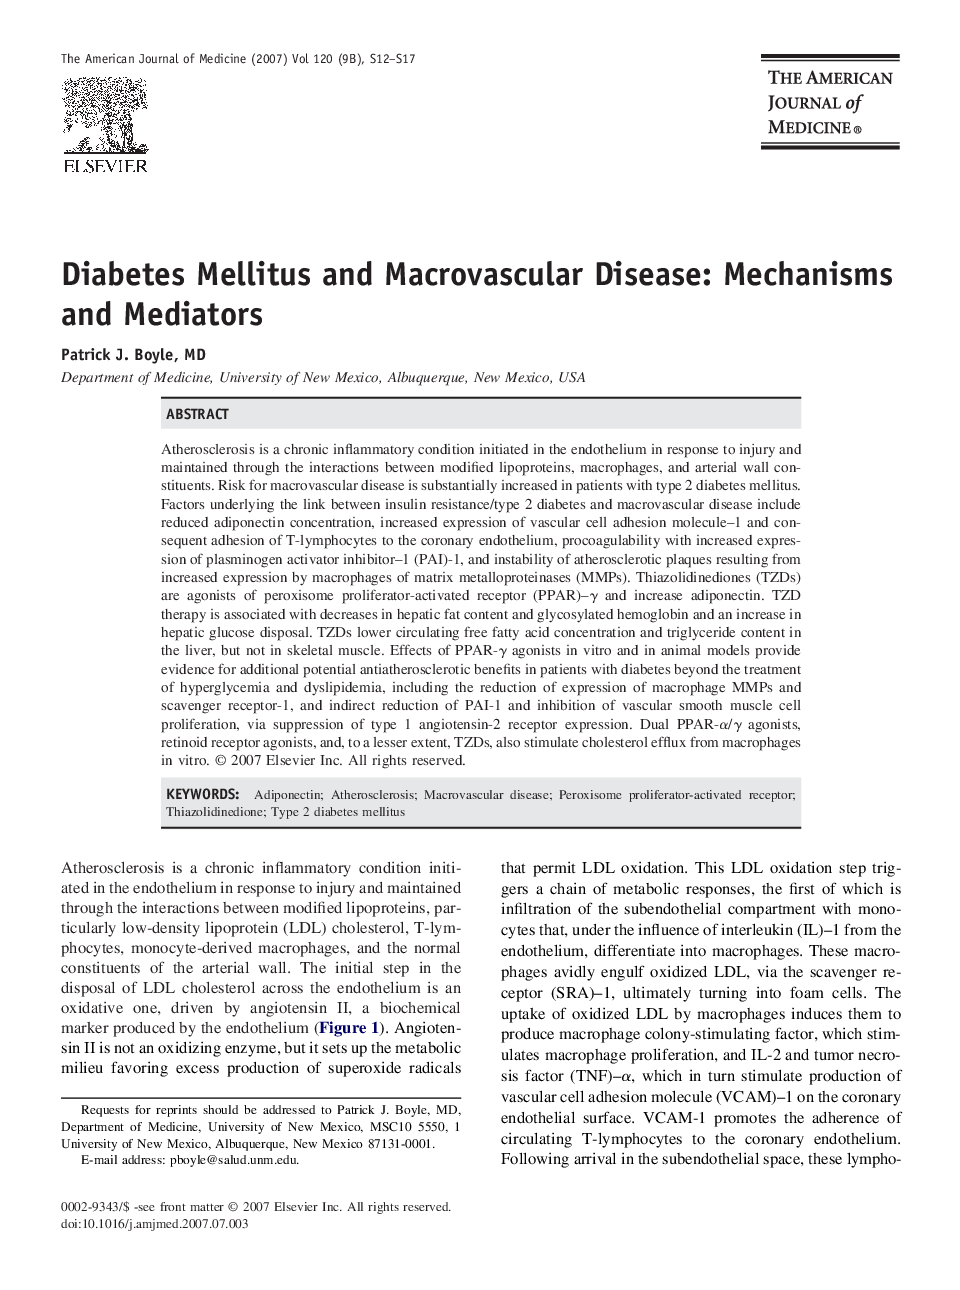 Diabetes Mellitus and Macrovascular Disease: Mechanisms and Mediators